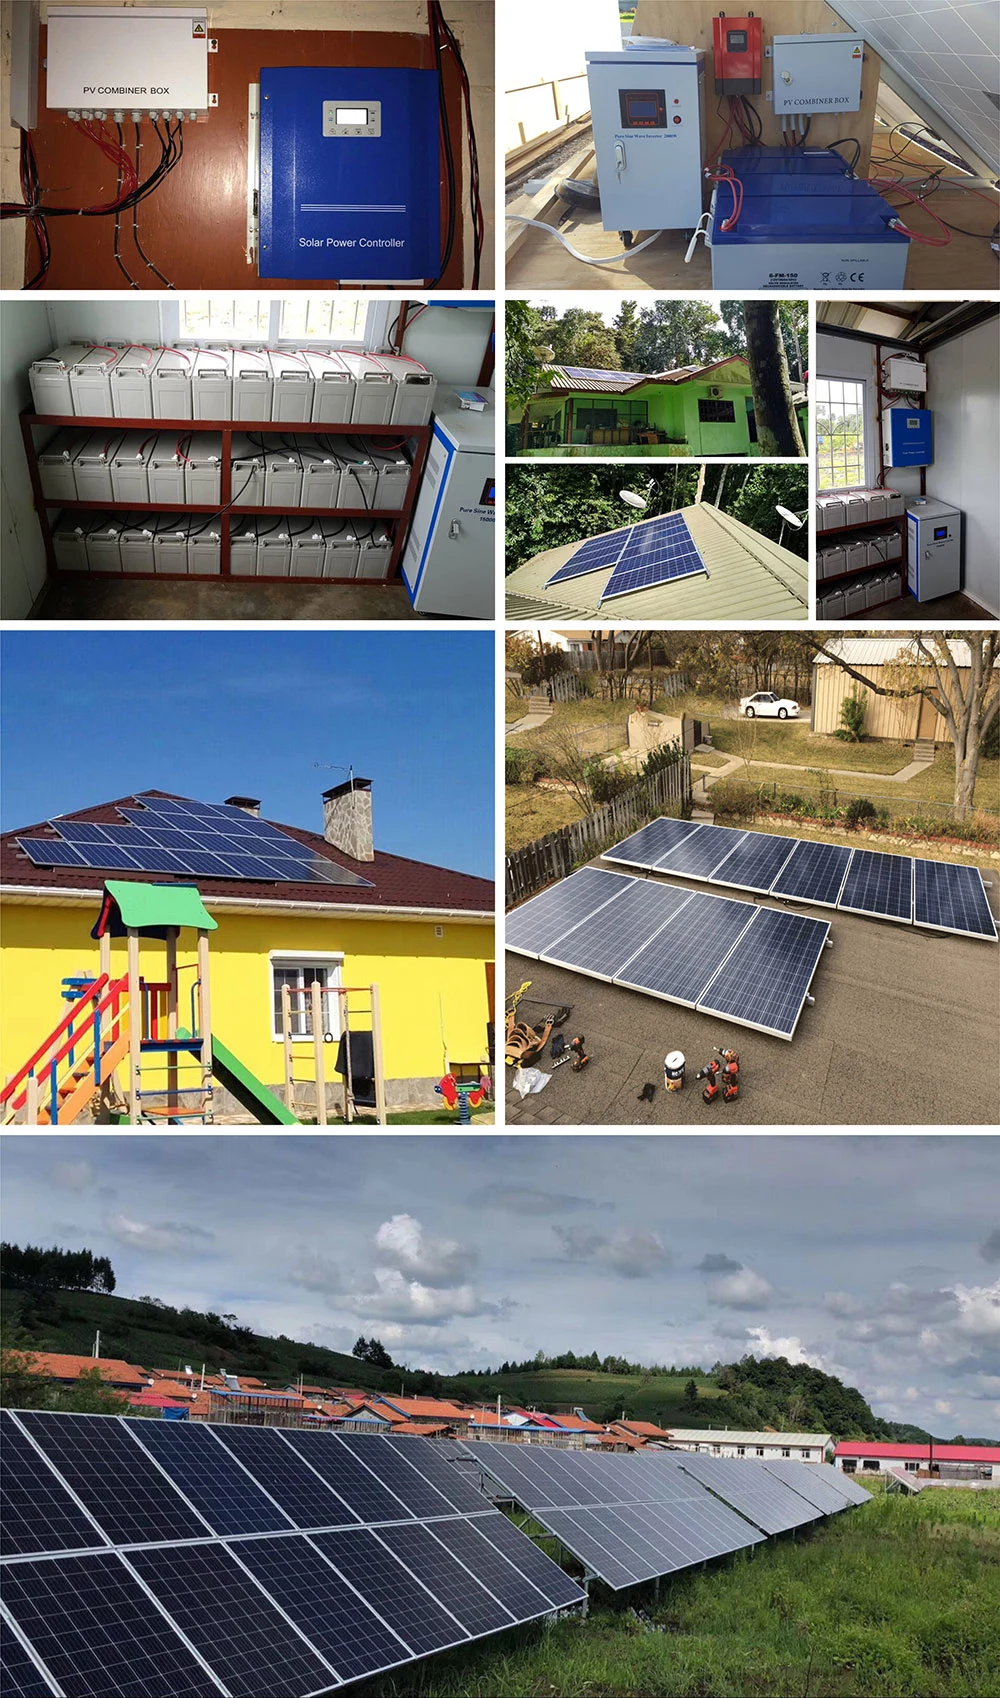 PV Panel Set off Grid Solar Hybrid 3 Phase System 10kw 15kw Solar Power System Home